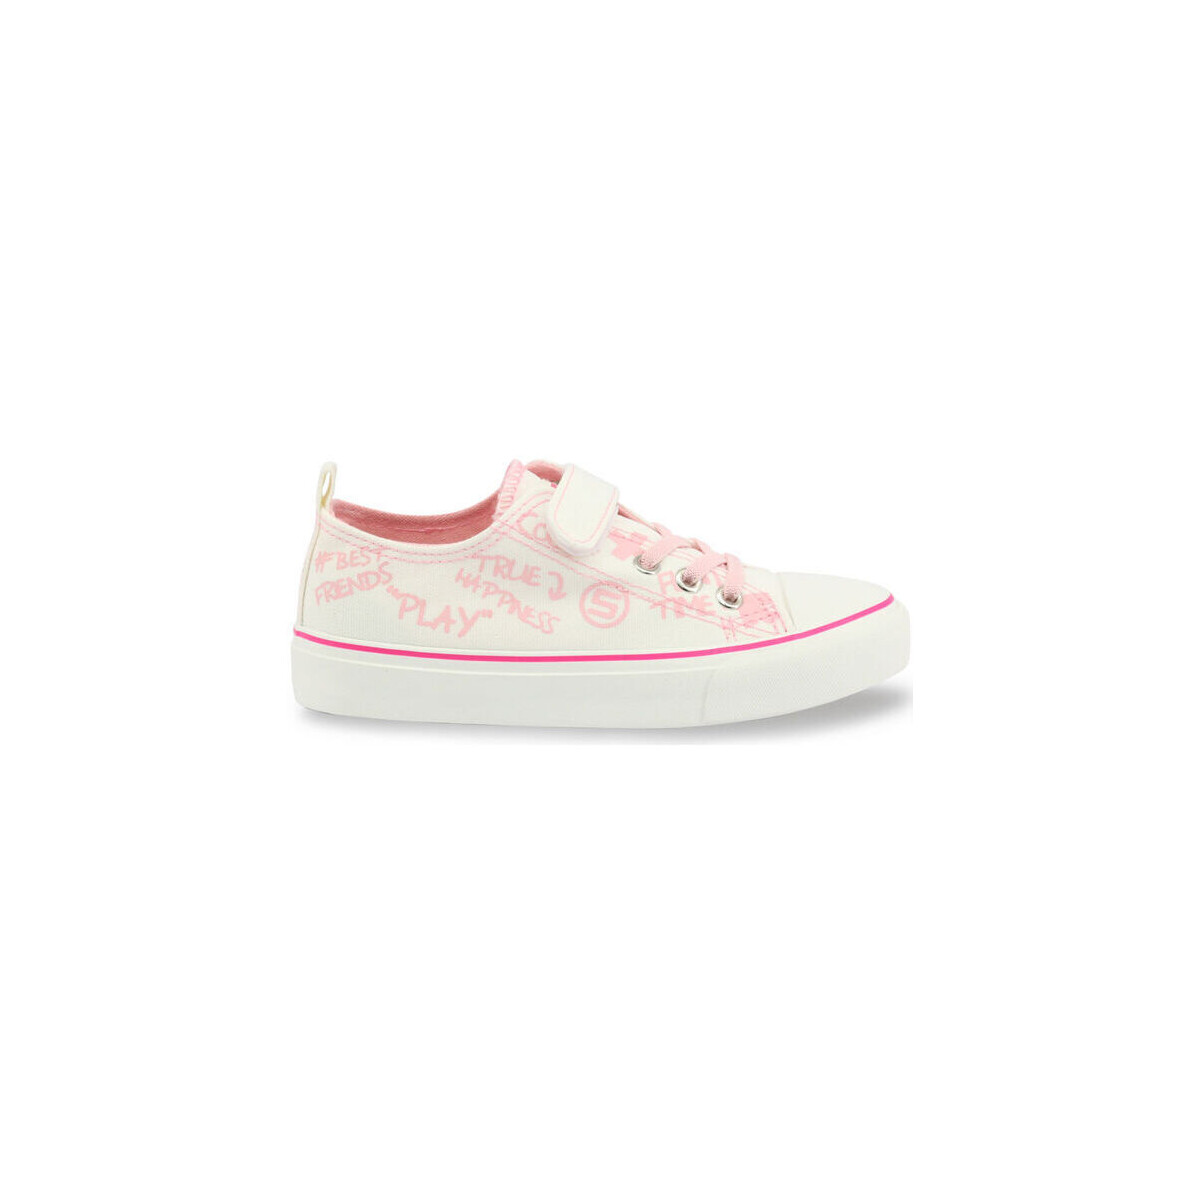 Sko Herre Sneakers Shone 291-002 White/Pink Hvid